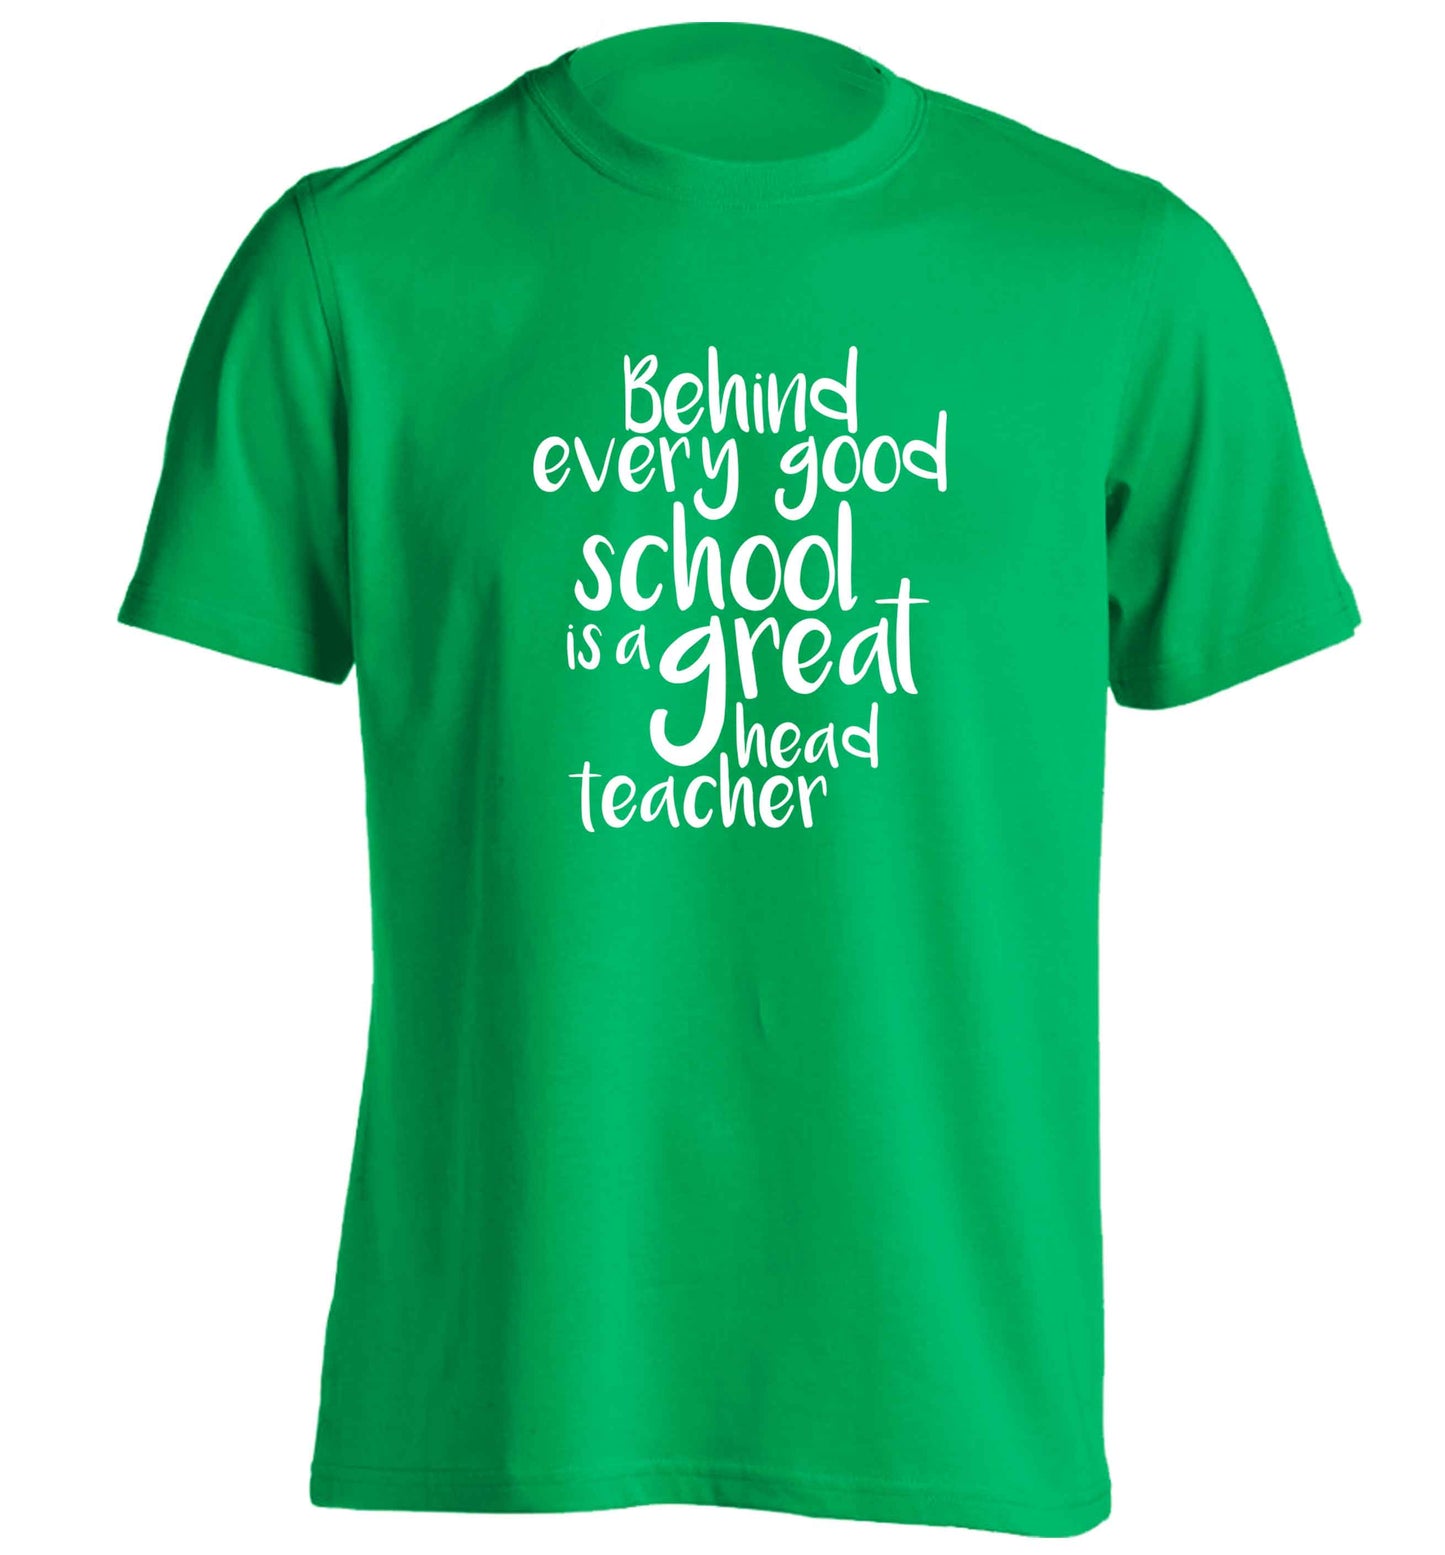 Behind every good school is a great head teacher adults unisex green Tshirt 2XL